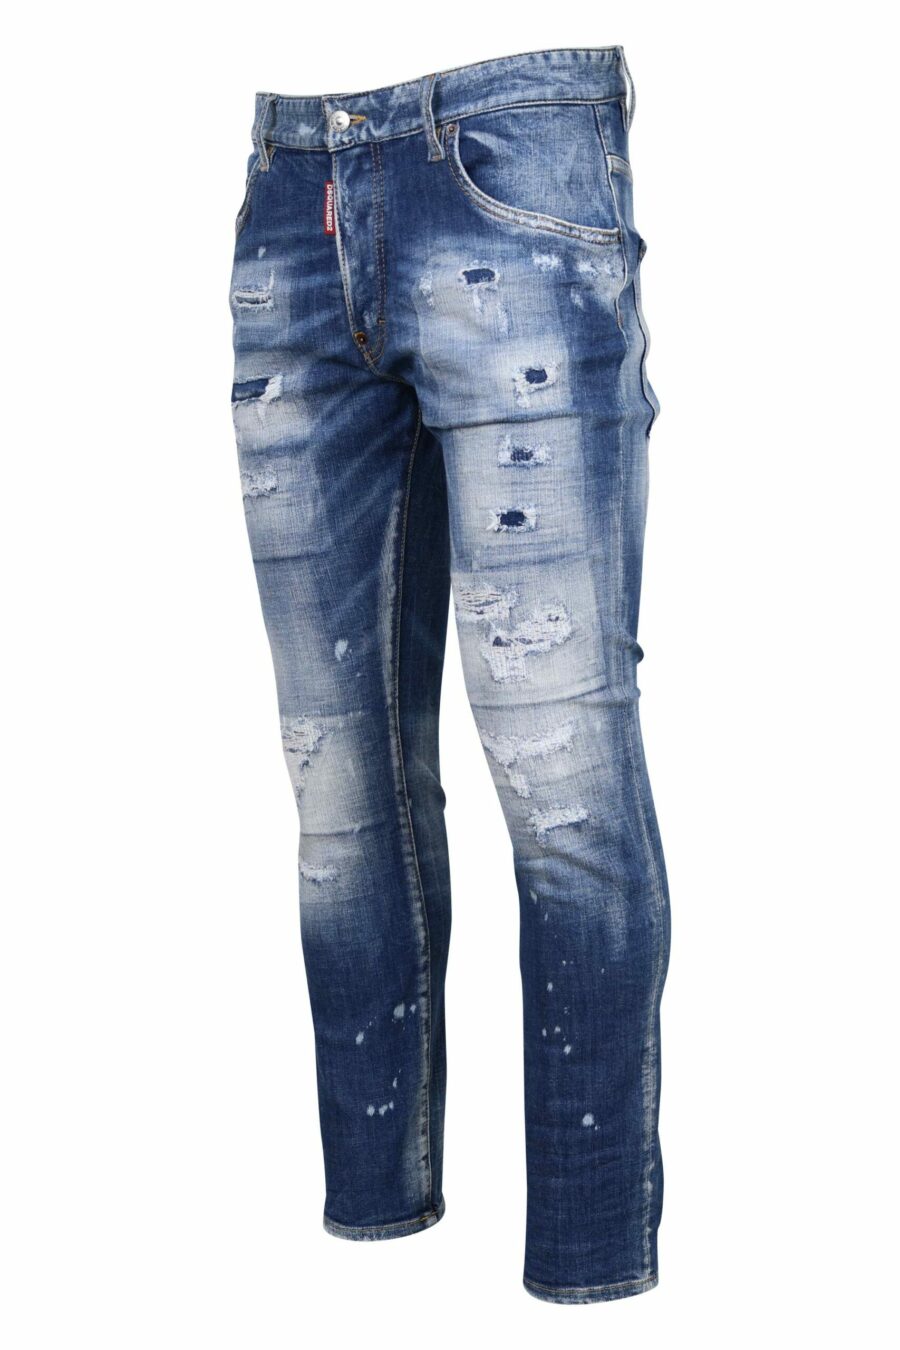 Pantalón vaquero azul claro "skater jean" con rotos y desgastado - 8054148338848 1 scaled